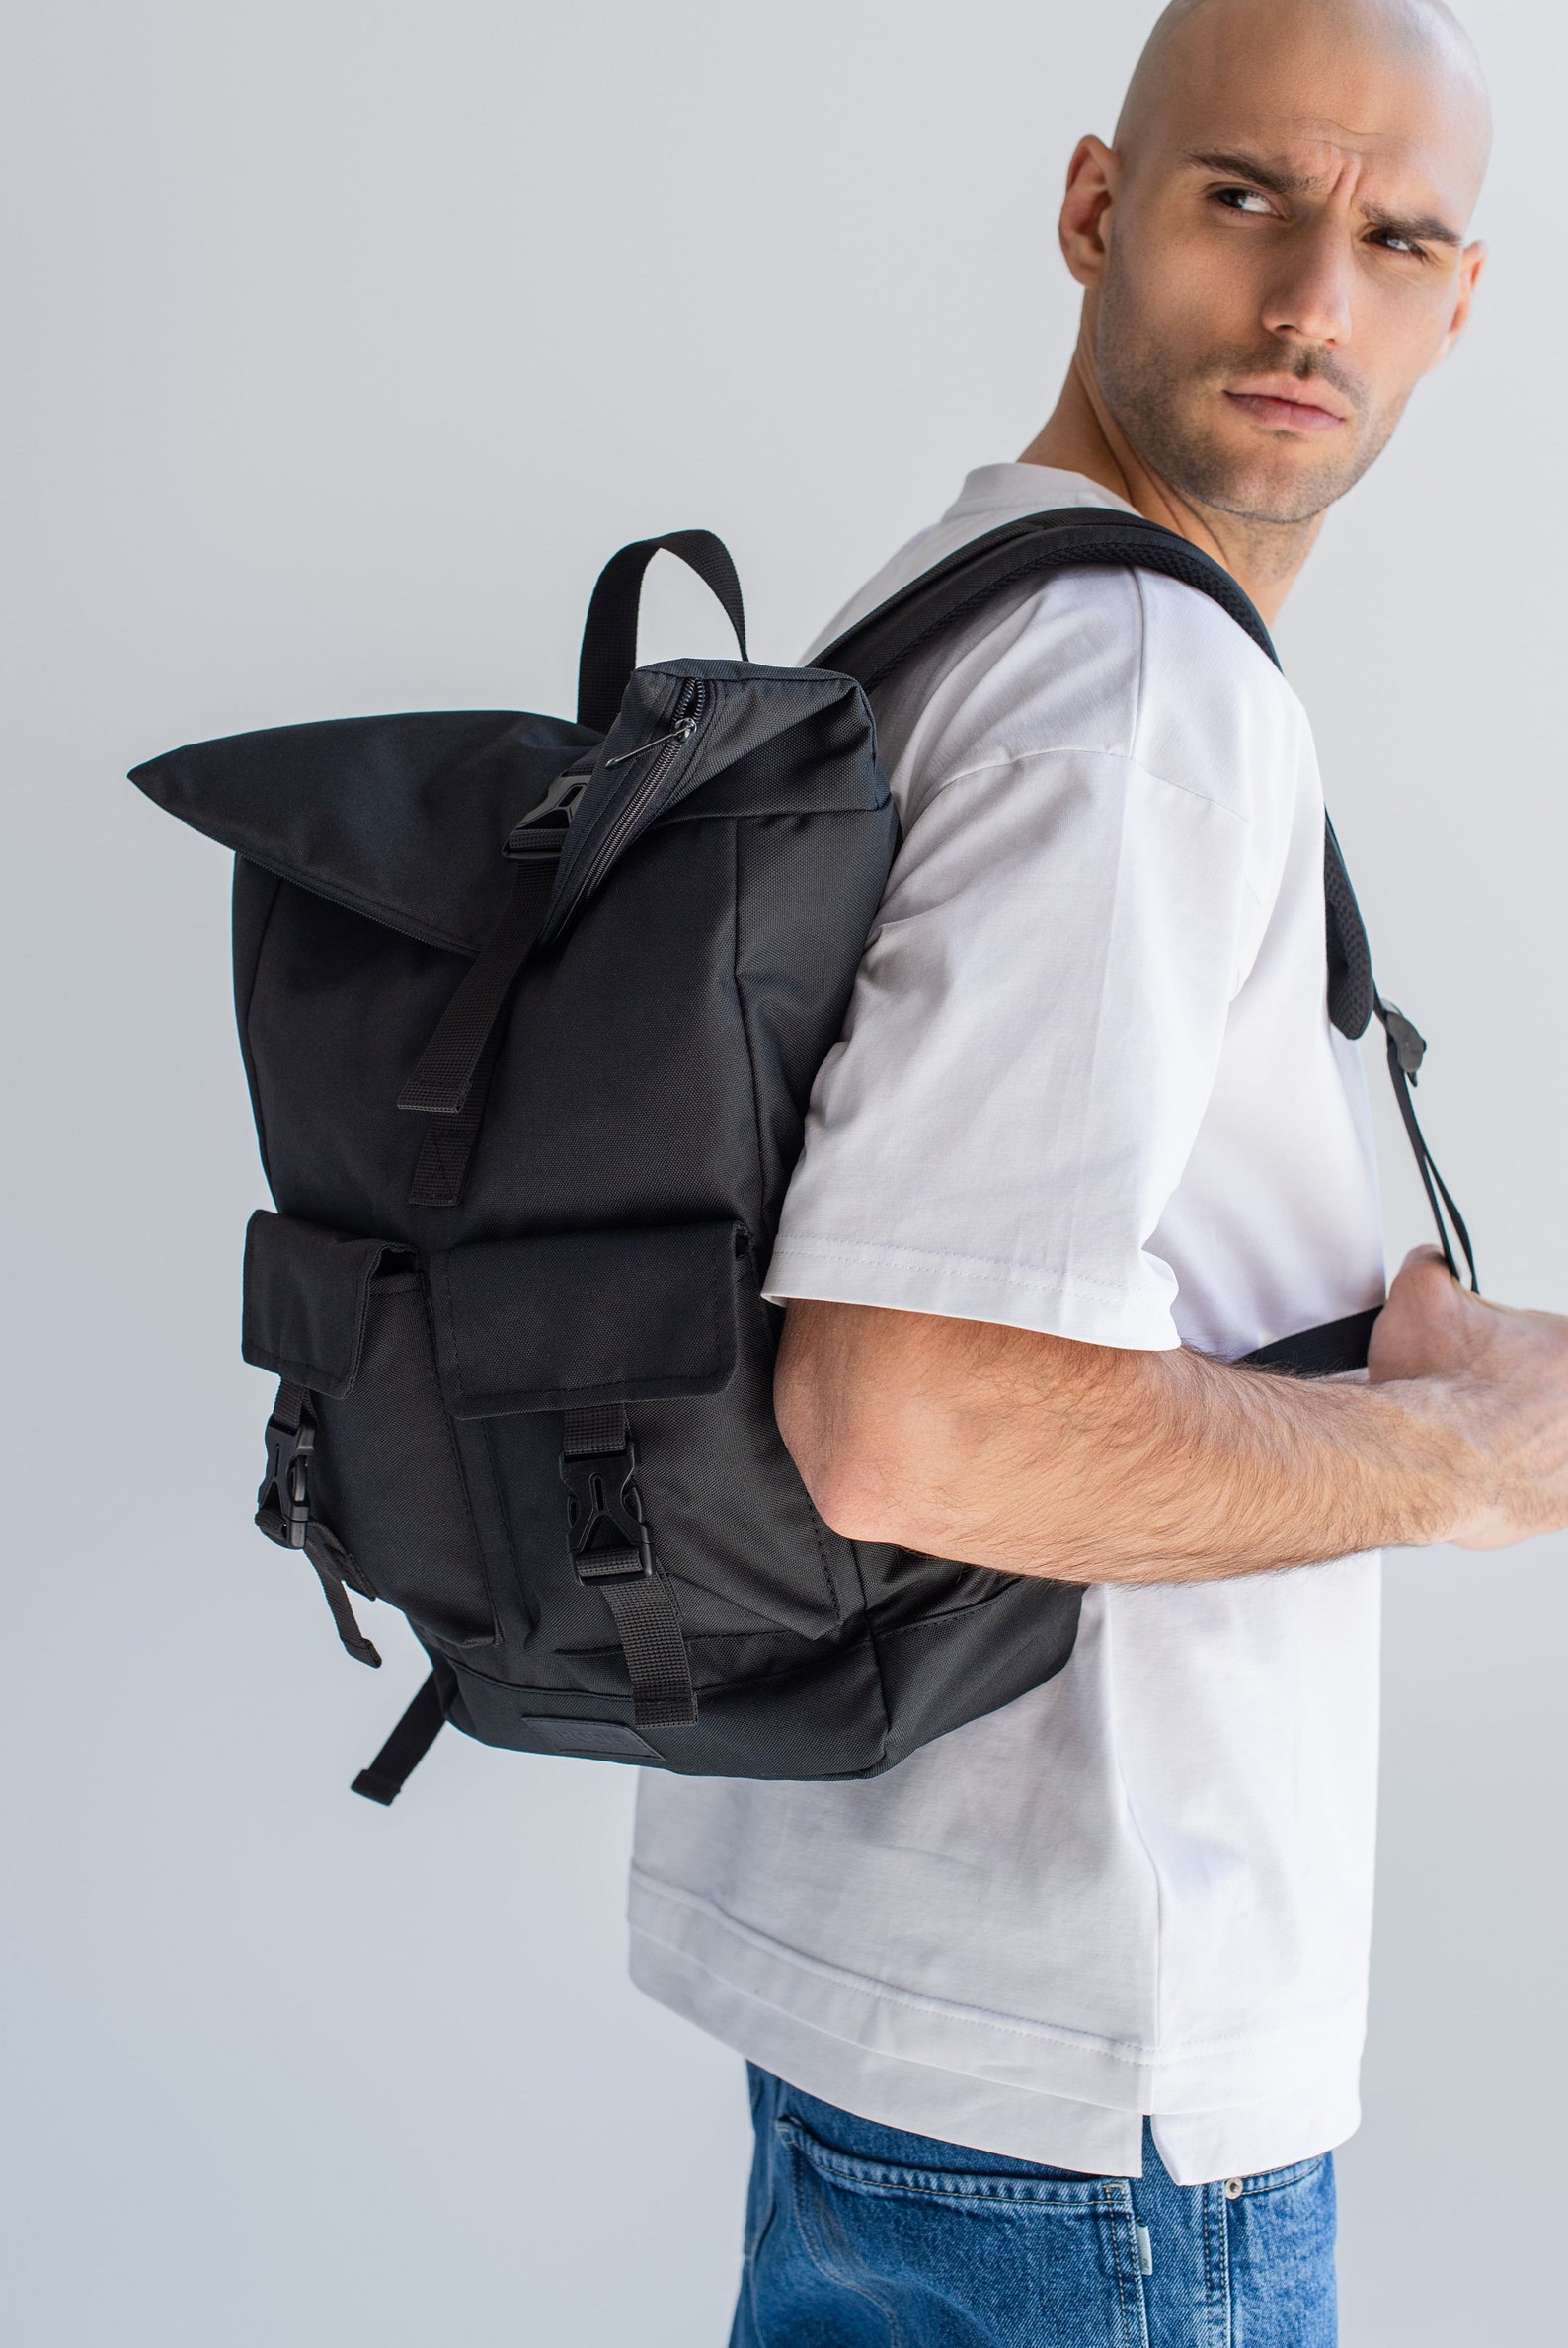 Roll Top Backpack Mens Travel Bag Roll Top School Bag | Etsy